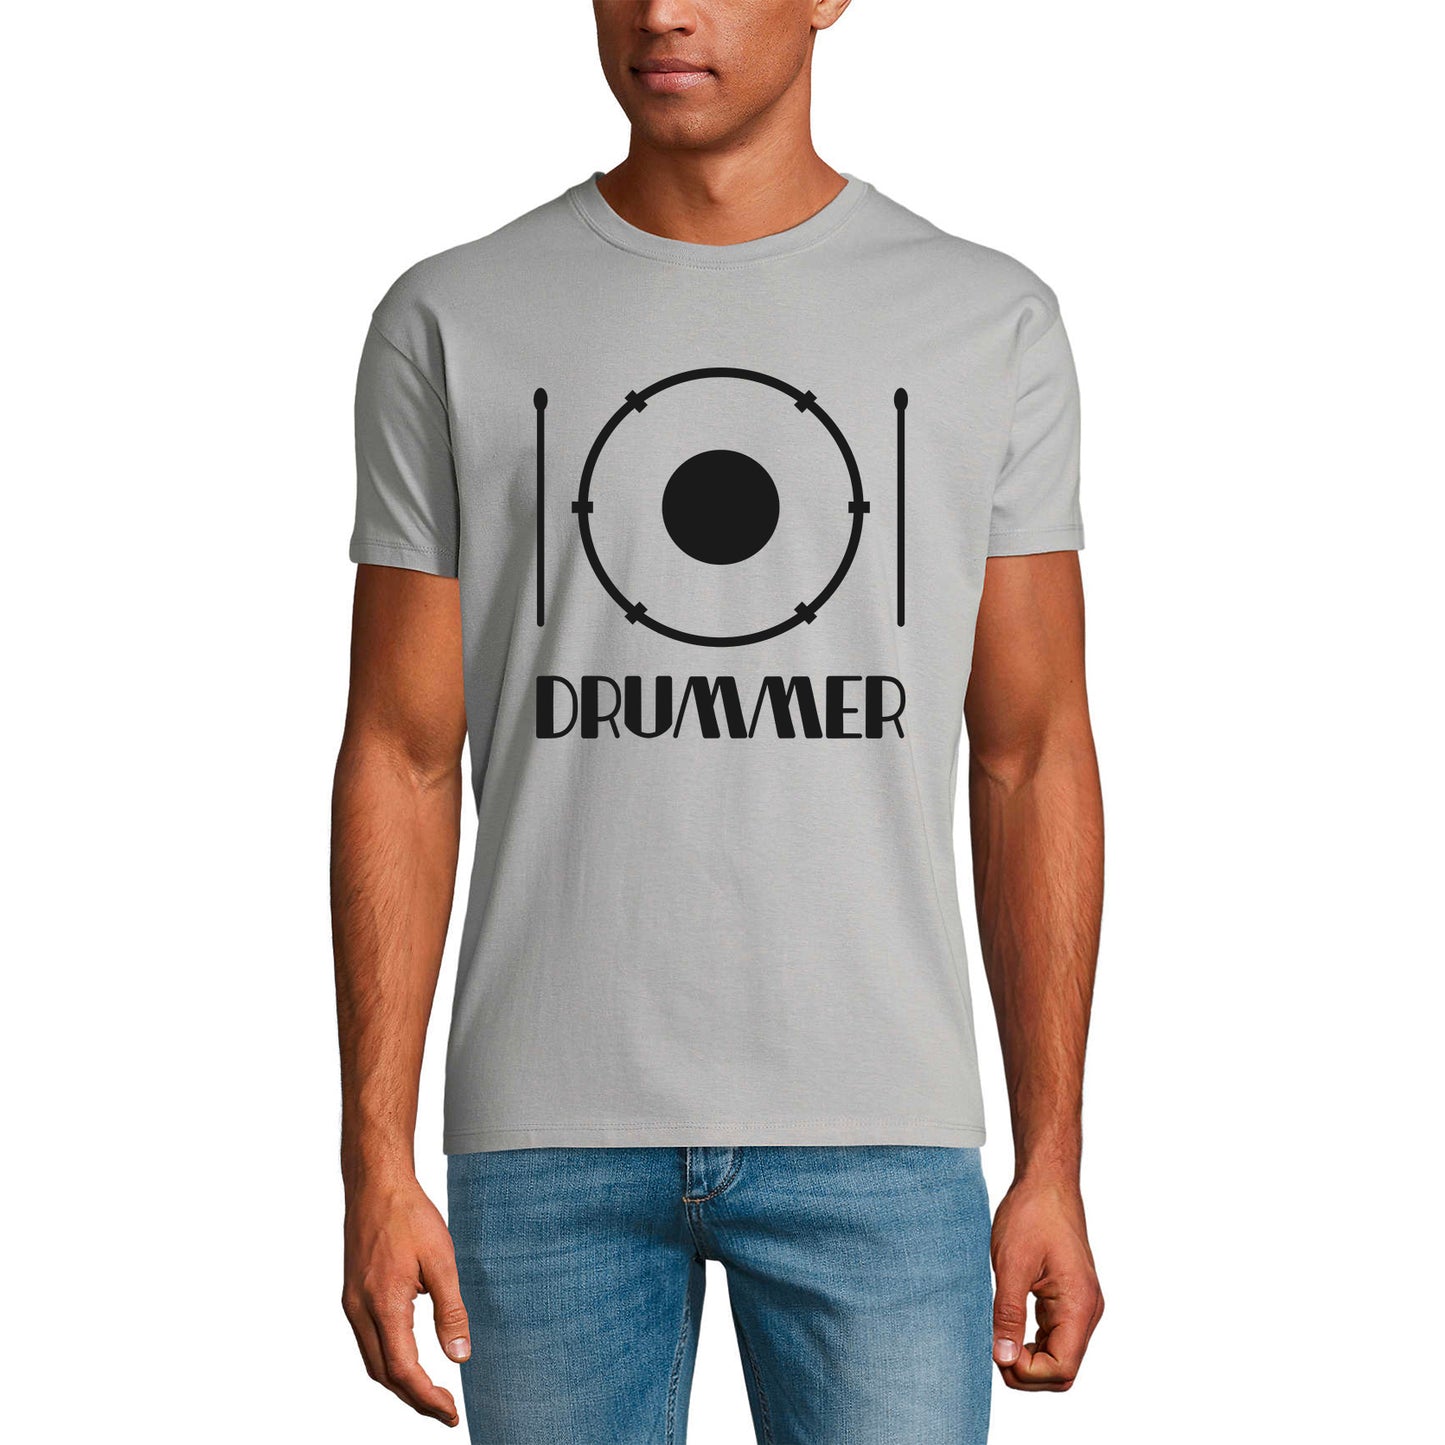 ULTRABASIC Men's Graphic T-Shirt Drum Musical Instrument - Music Shirt for Drummer